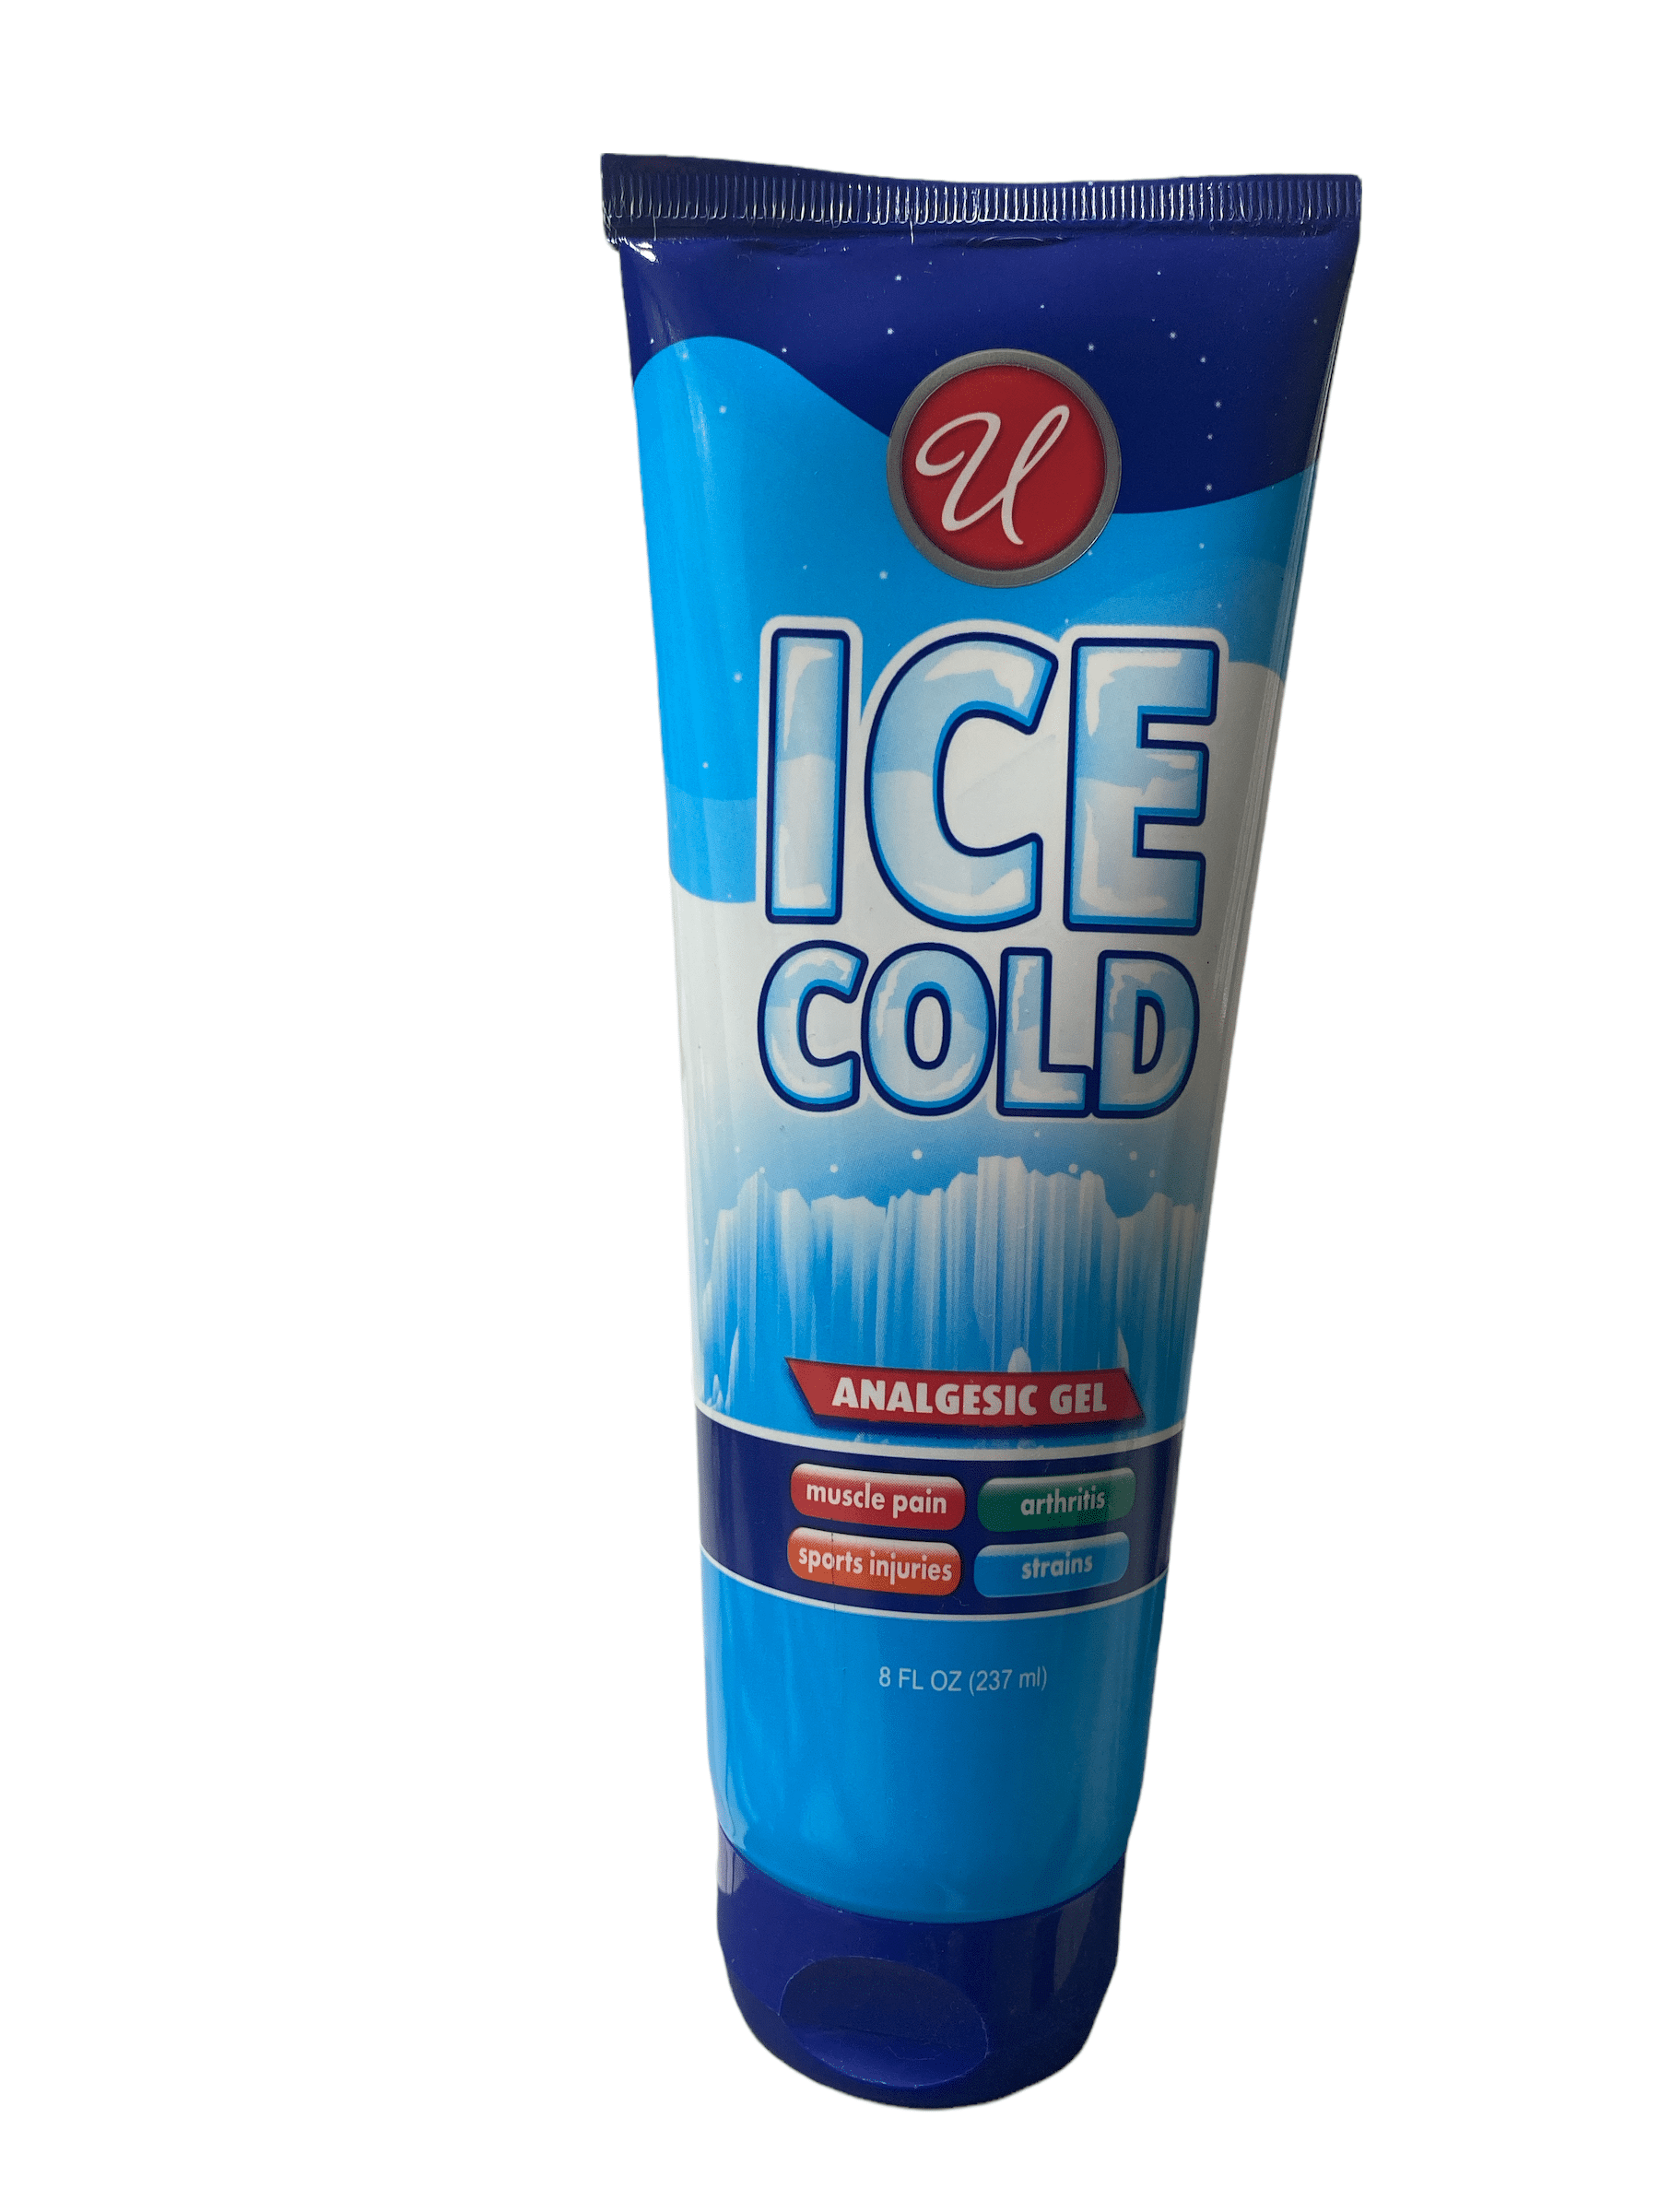 Ice Cold Analgesic Gel 8 oz 327 ml Muscle Pain Arthritis Sports